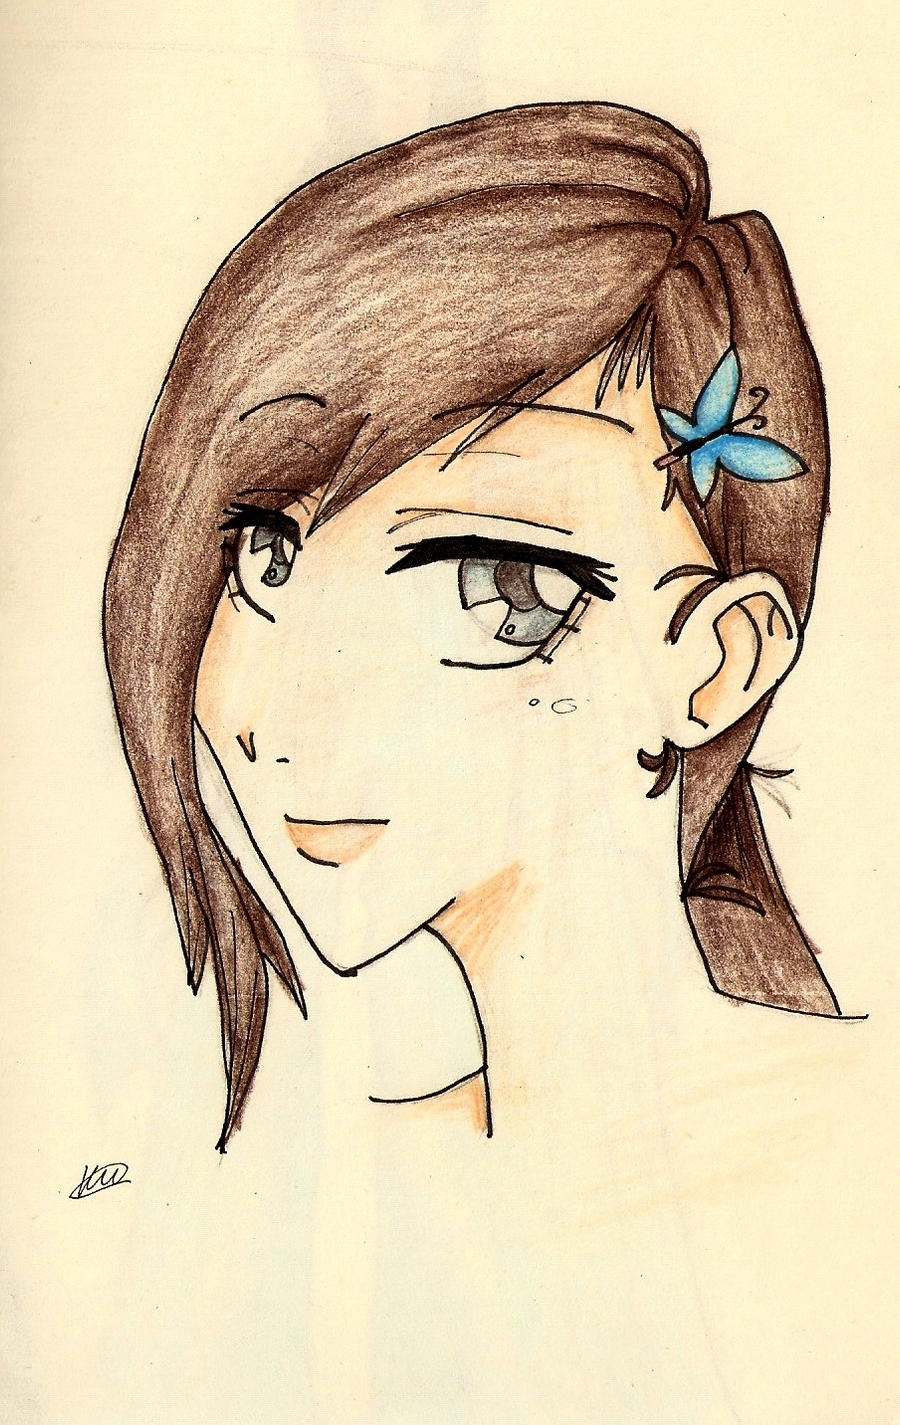 Manga portrait 2 by spirosprime13 on DeviantArt